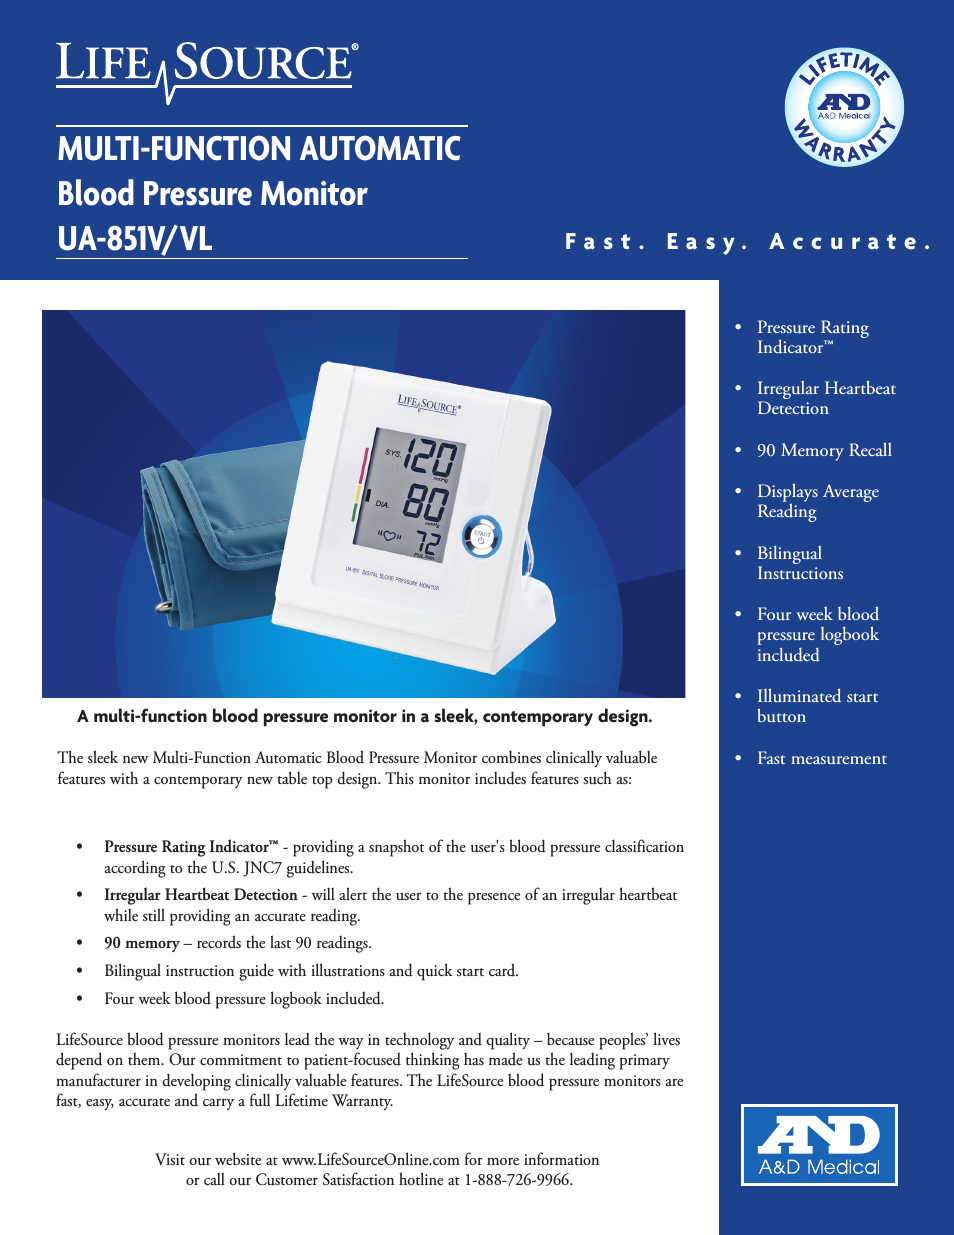 Life Source Multi-Function Automatic Blood Pressure Monitor UA-851/V/VL